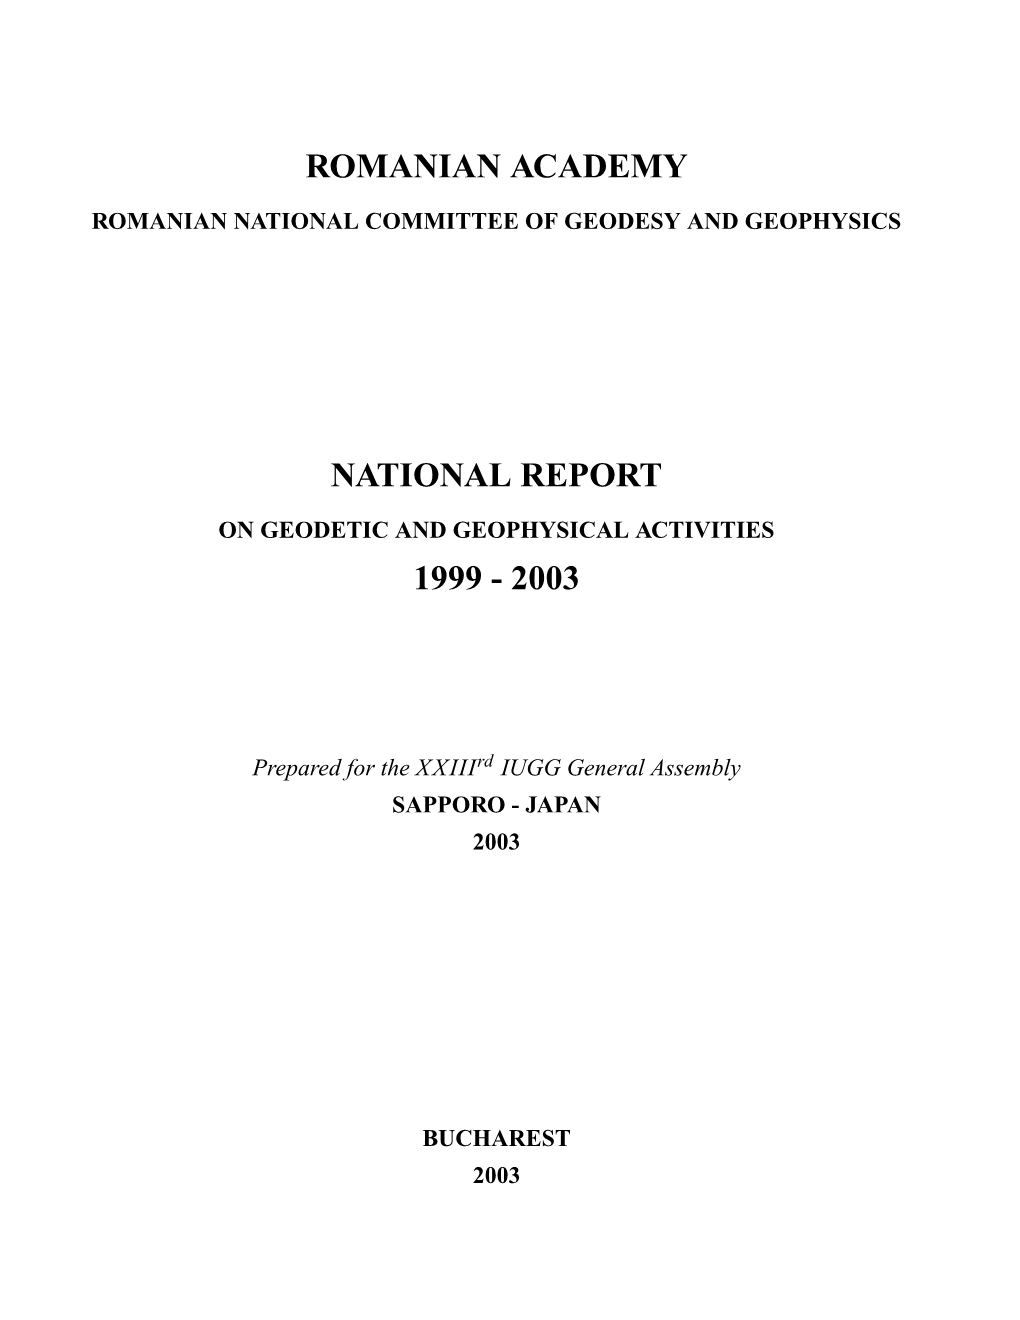 Romanian Academy National Report 1999